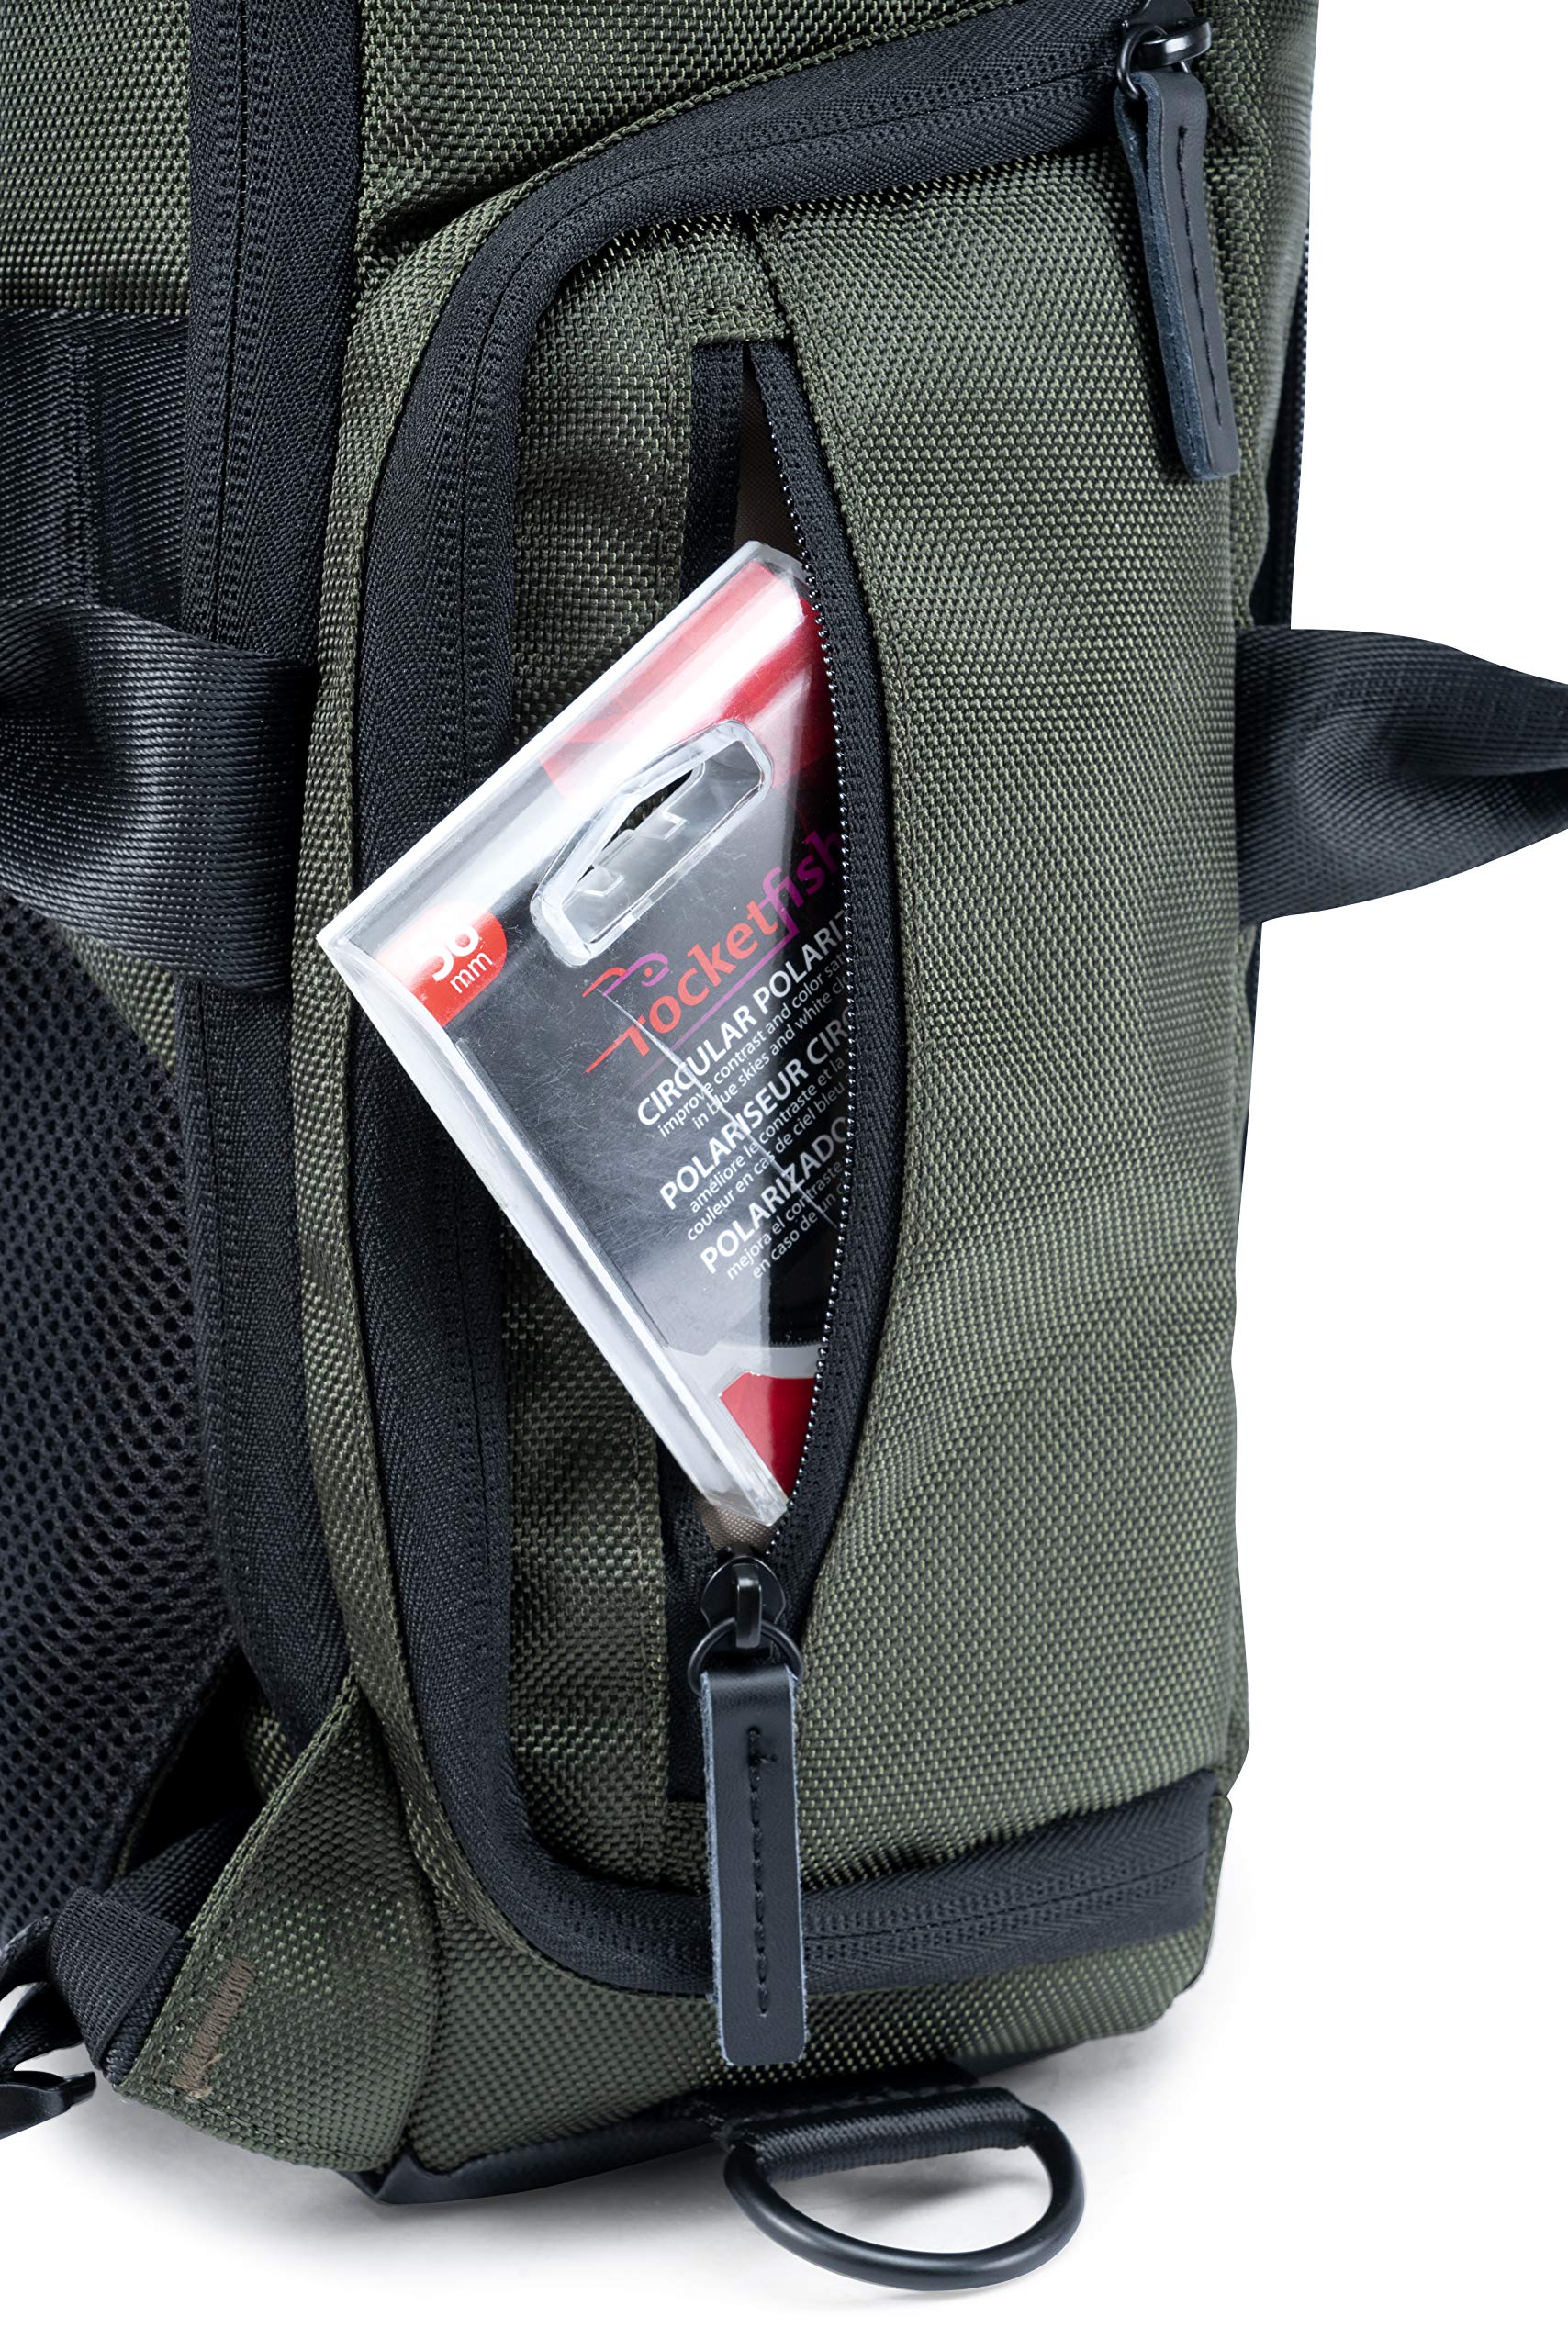 Vanguard VEO SELECT49 GR Backpack/Shoulder Bag for DSLR, Mirrorless/CSC Camera or Drone, Green